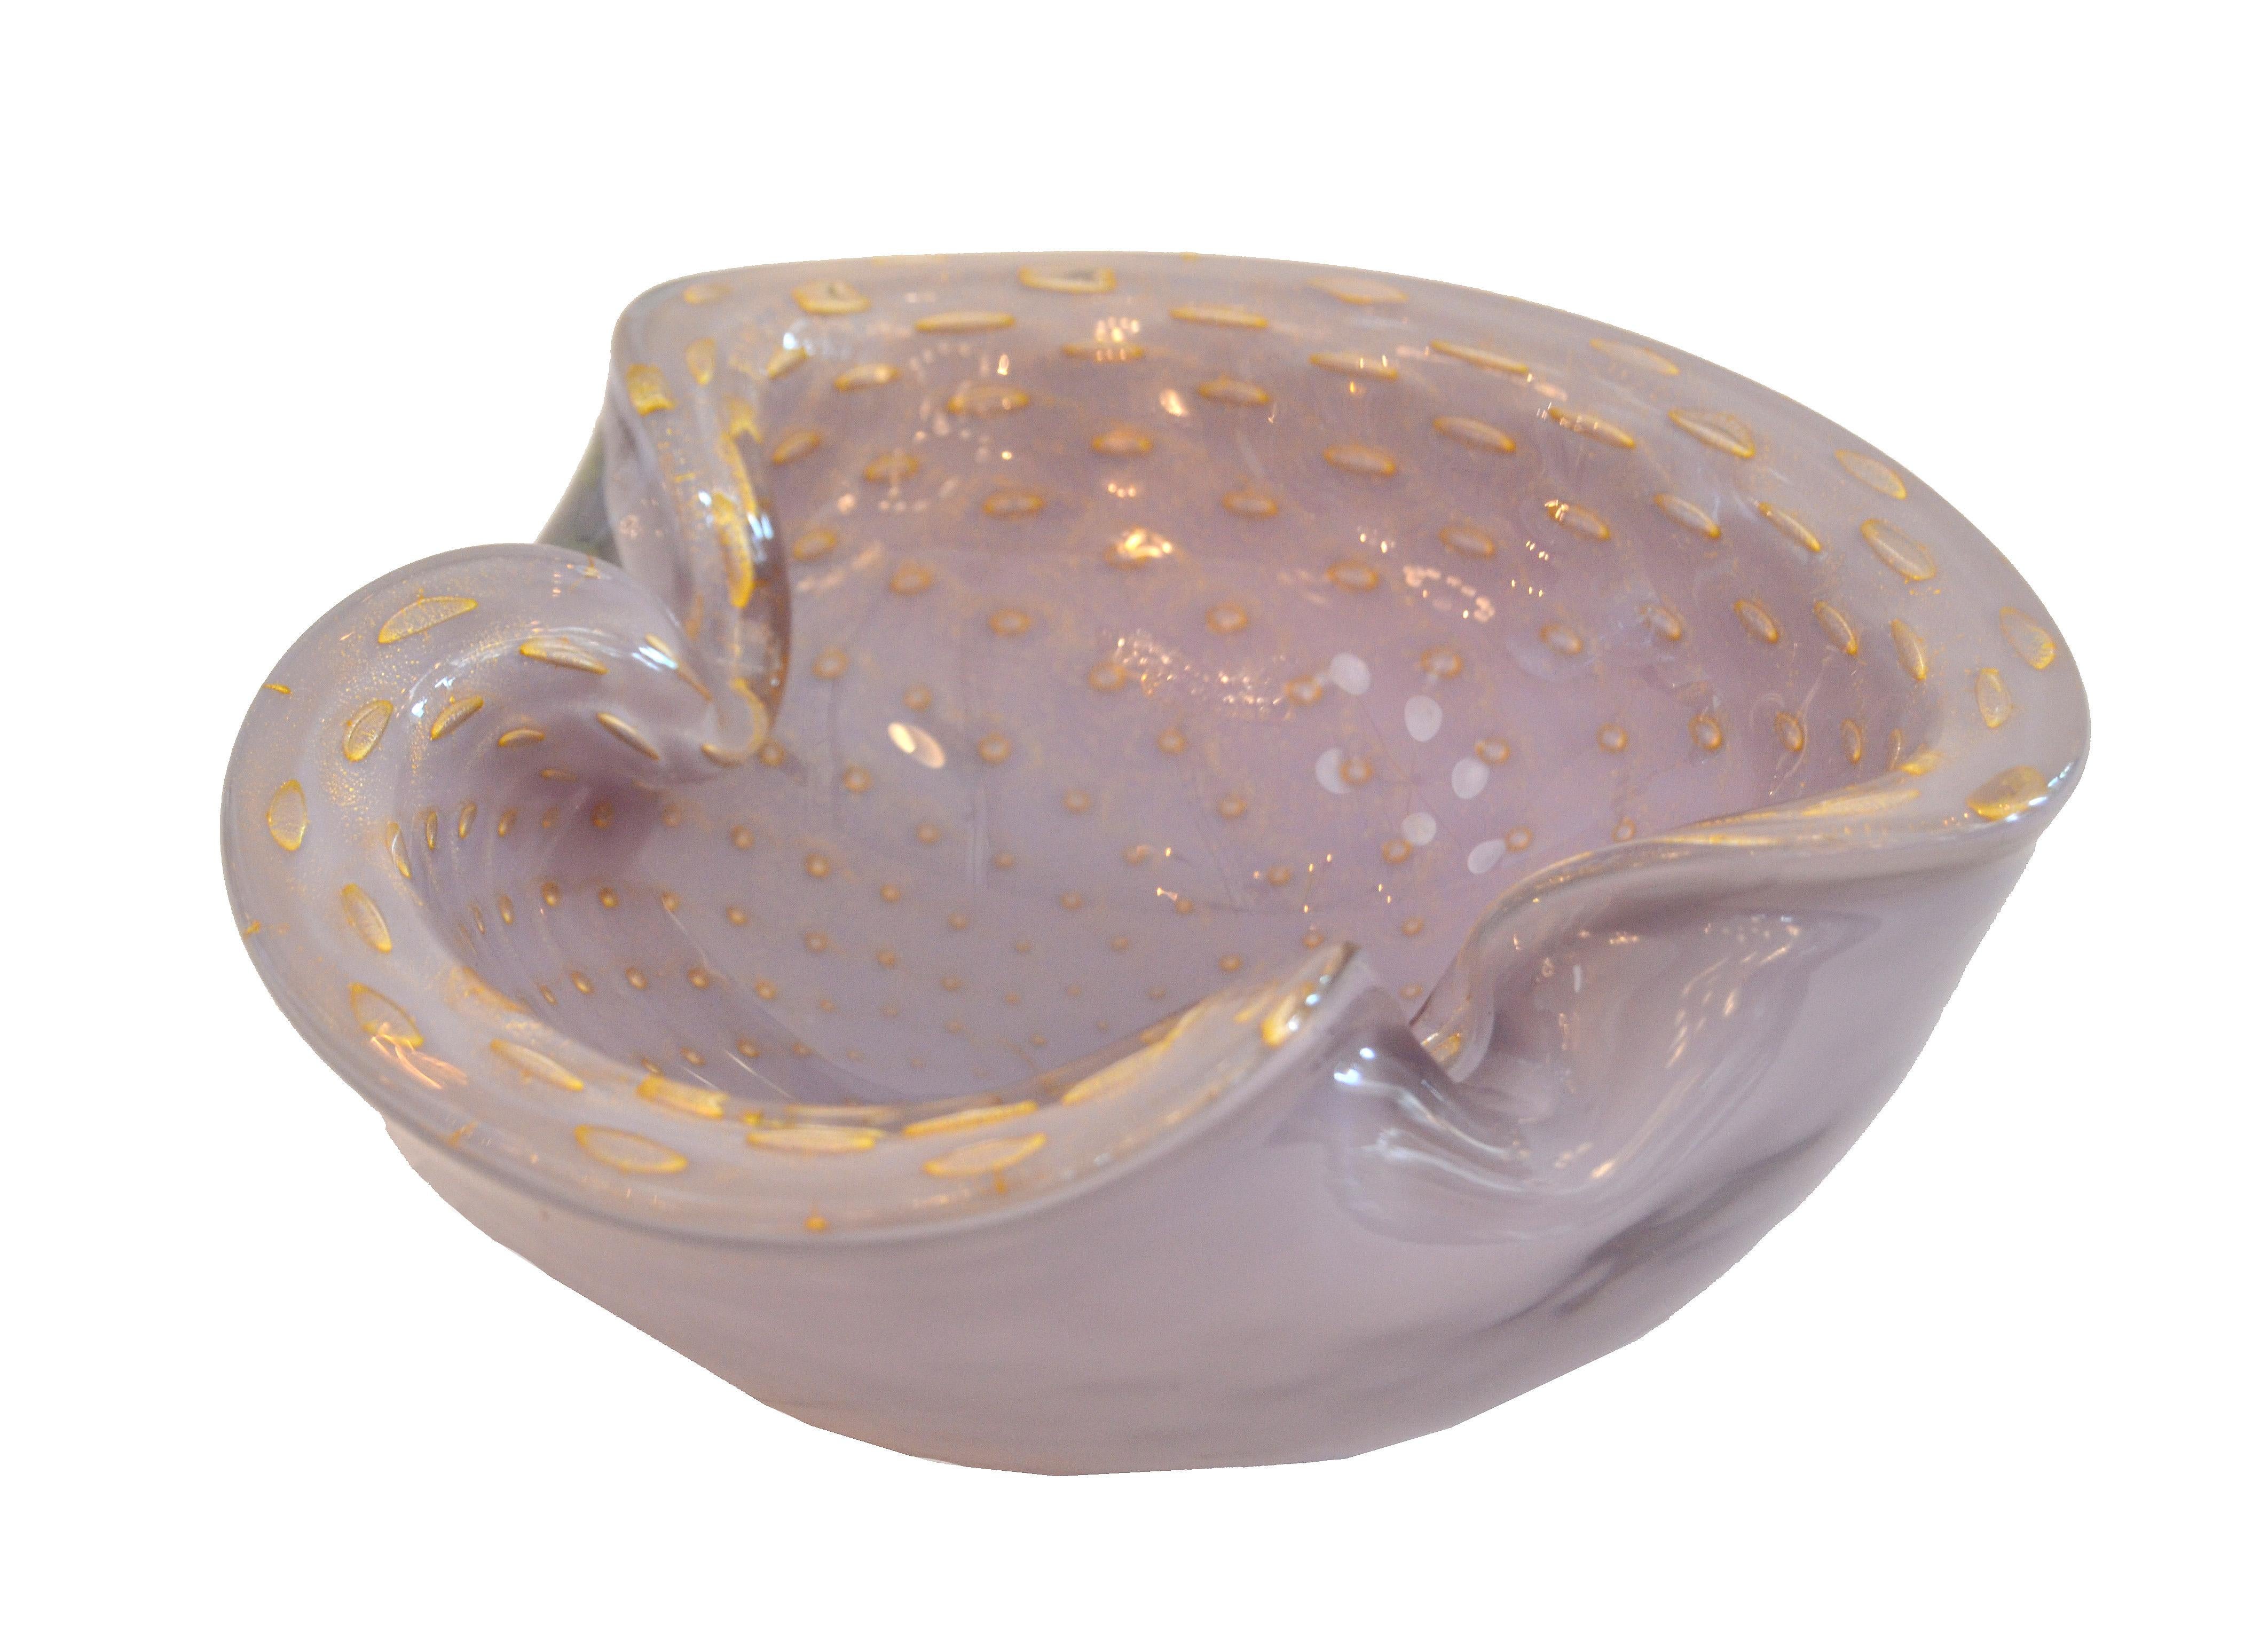 Murano Glass light purple and gold flecks bowl / catchall.
No markings.
Simply beautiful.